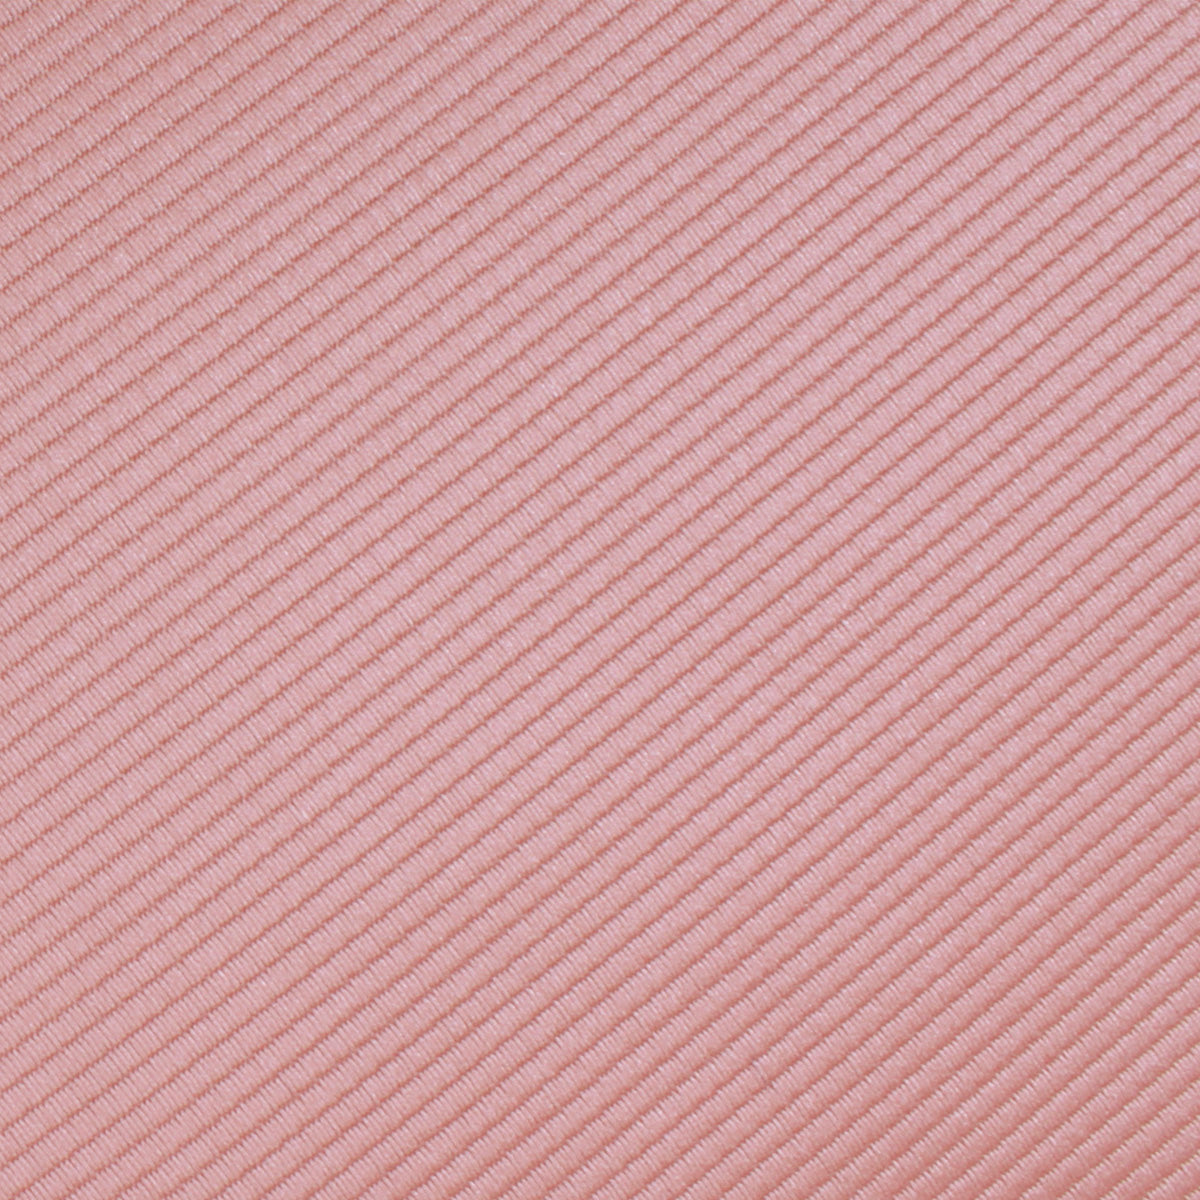 Dusty Blush Pink Twill Pocket Square Fabric